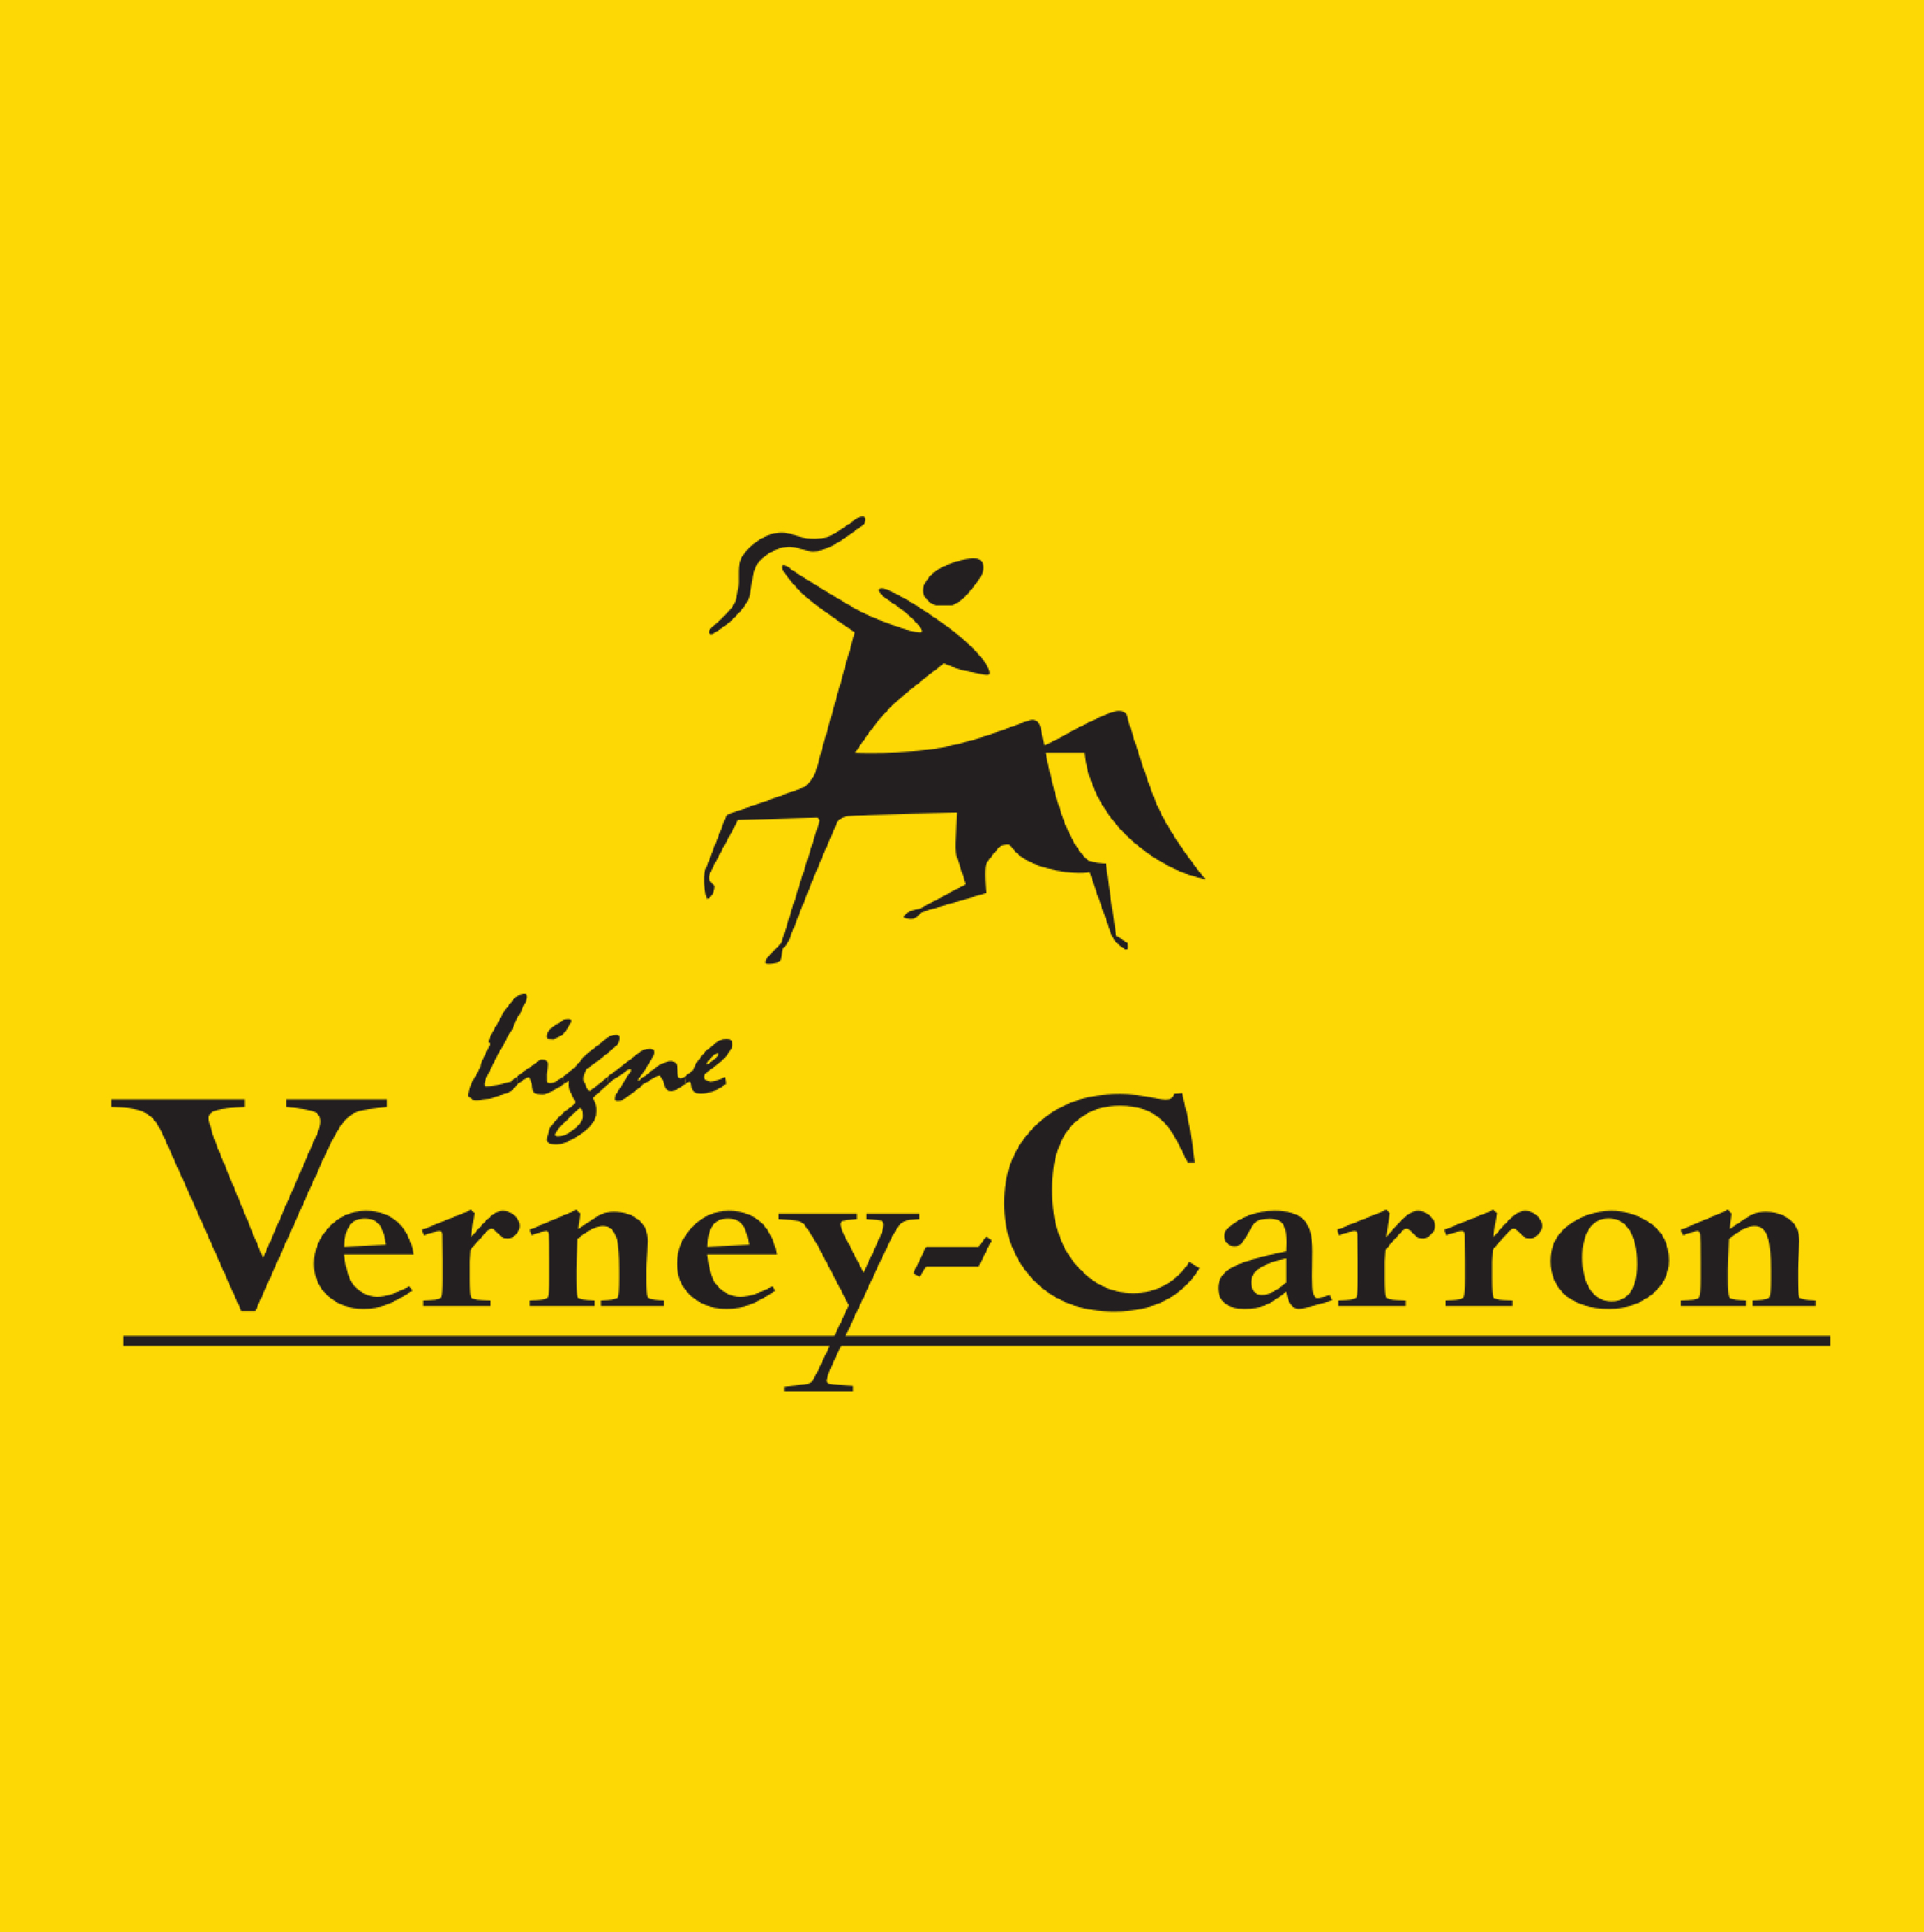 verney-carron